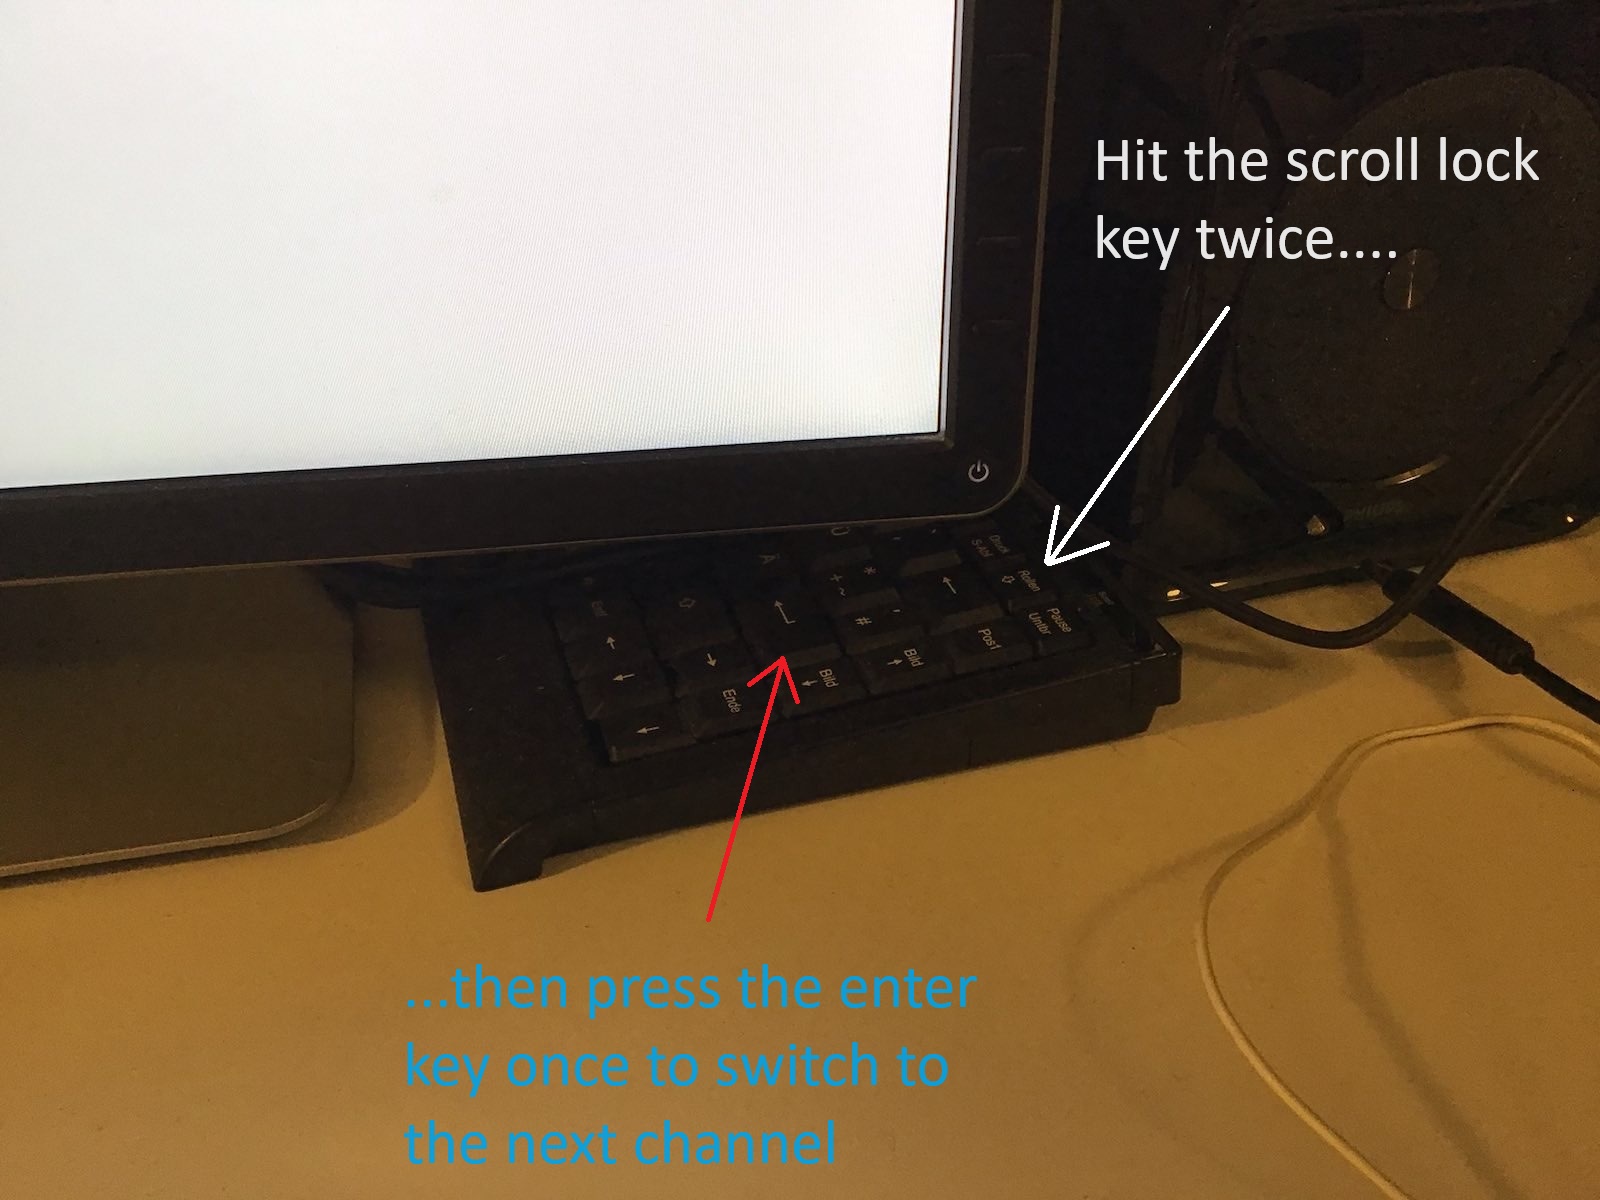 The USB keyboard hidden under the analog monitor